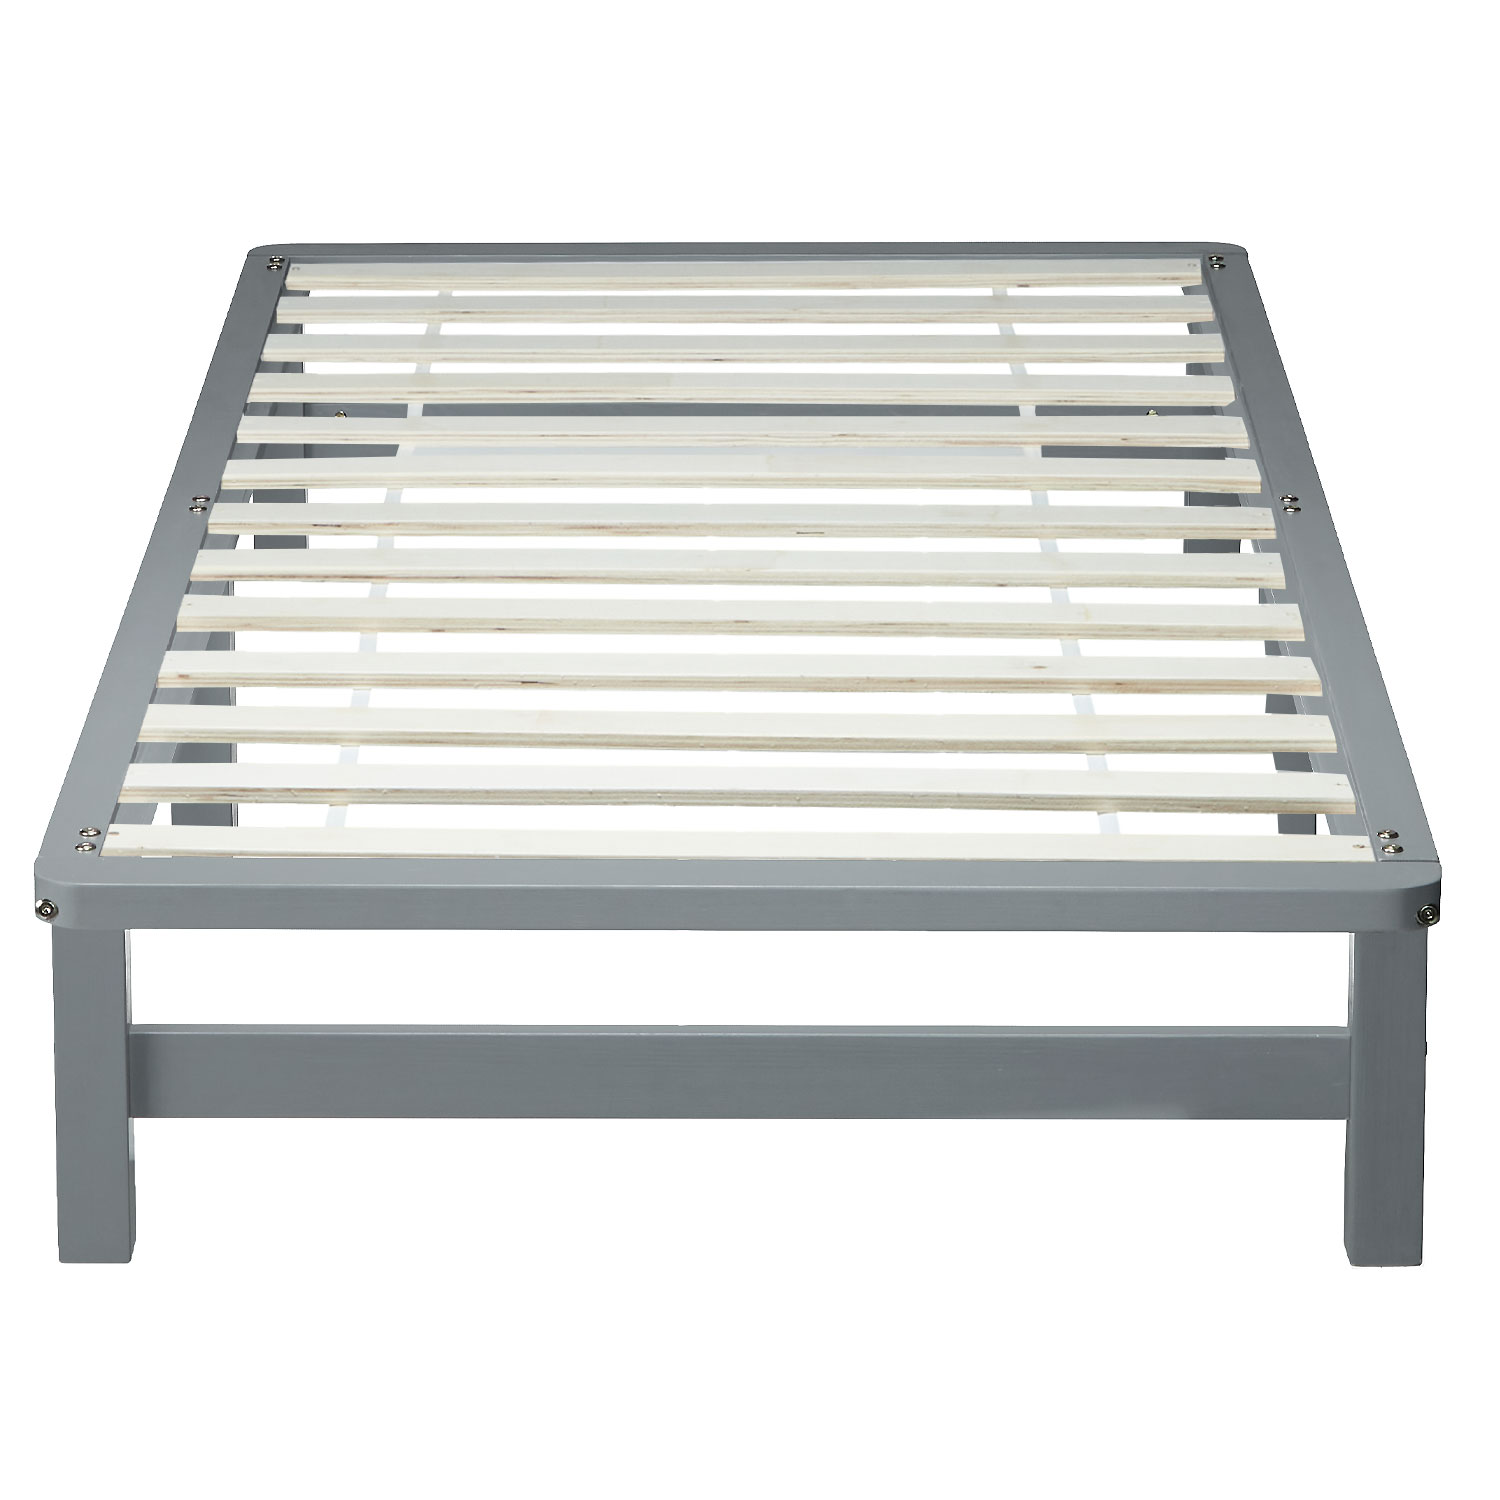 Pallet Bed 90x200 cm Solid Wood Bed Grey Pallet Furniture Bed Wooden Bed Futon Bed